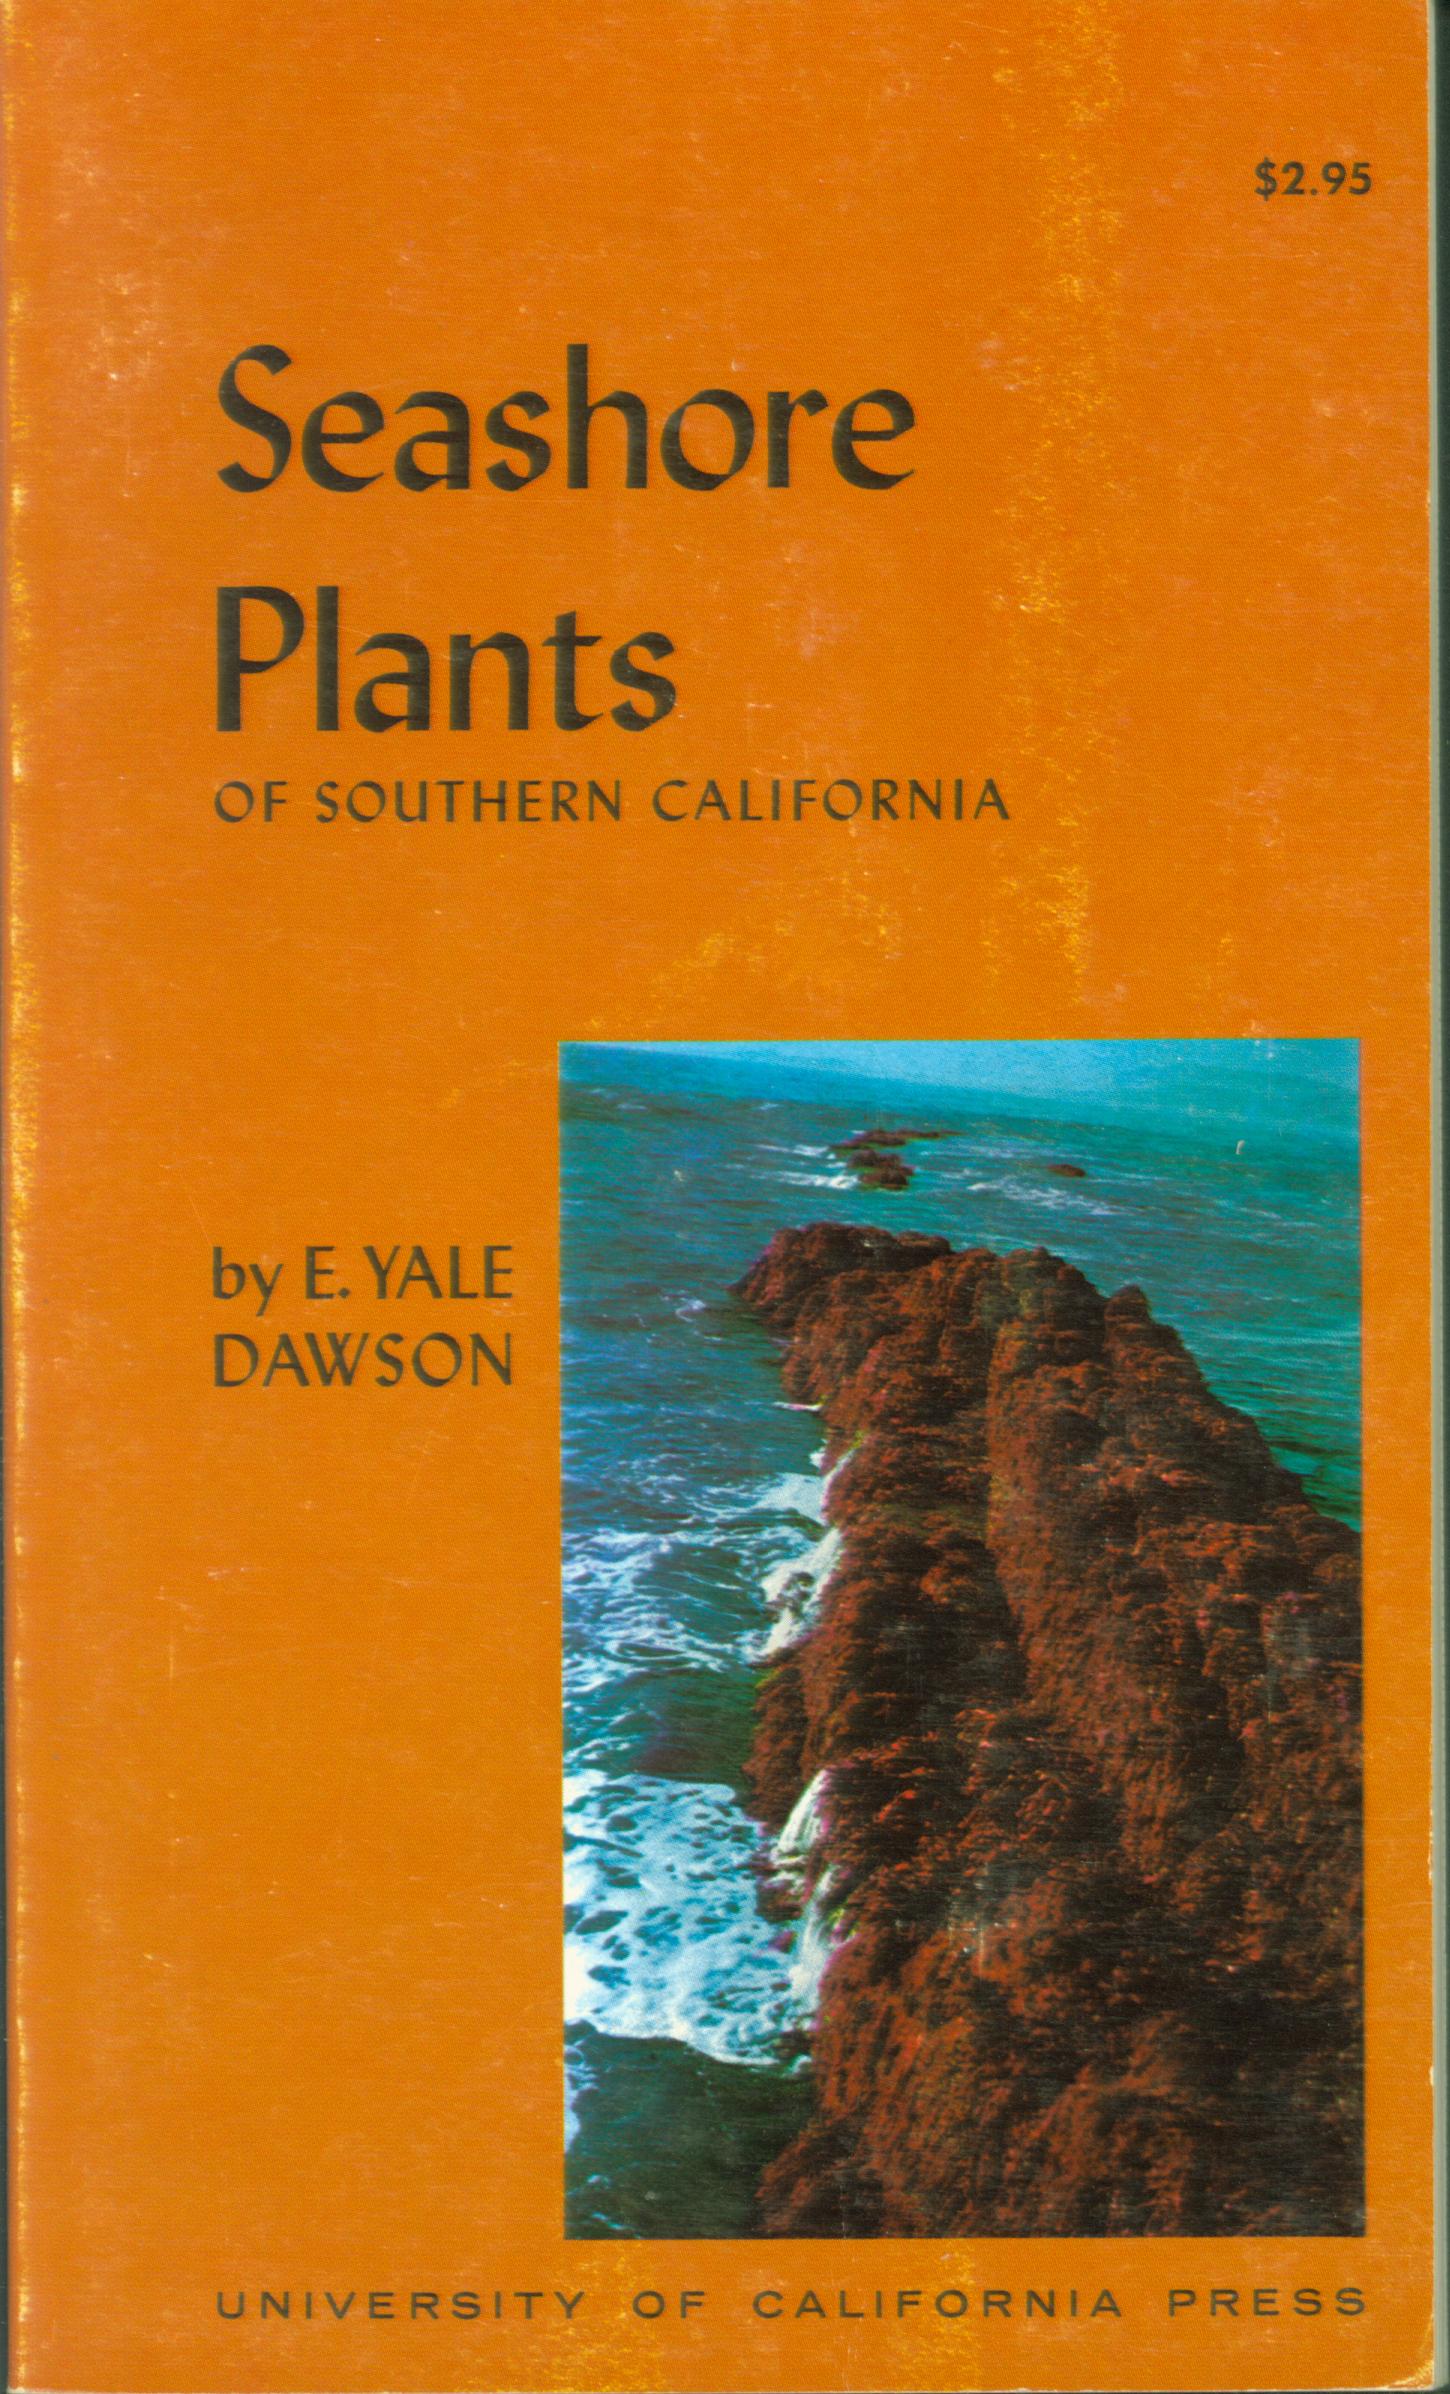 SEASHORE PLANTS OF SOUTHERN CALIFORNIA. by E. Yale Dawson.